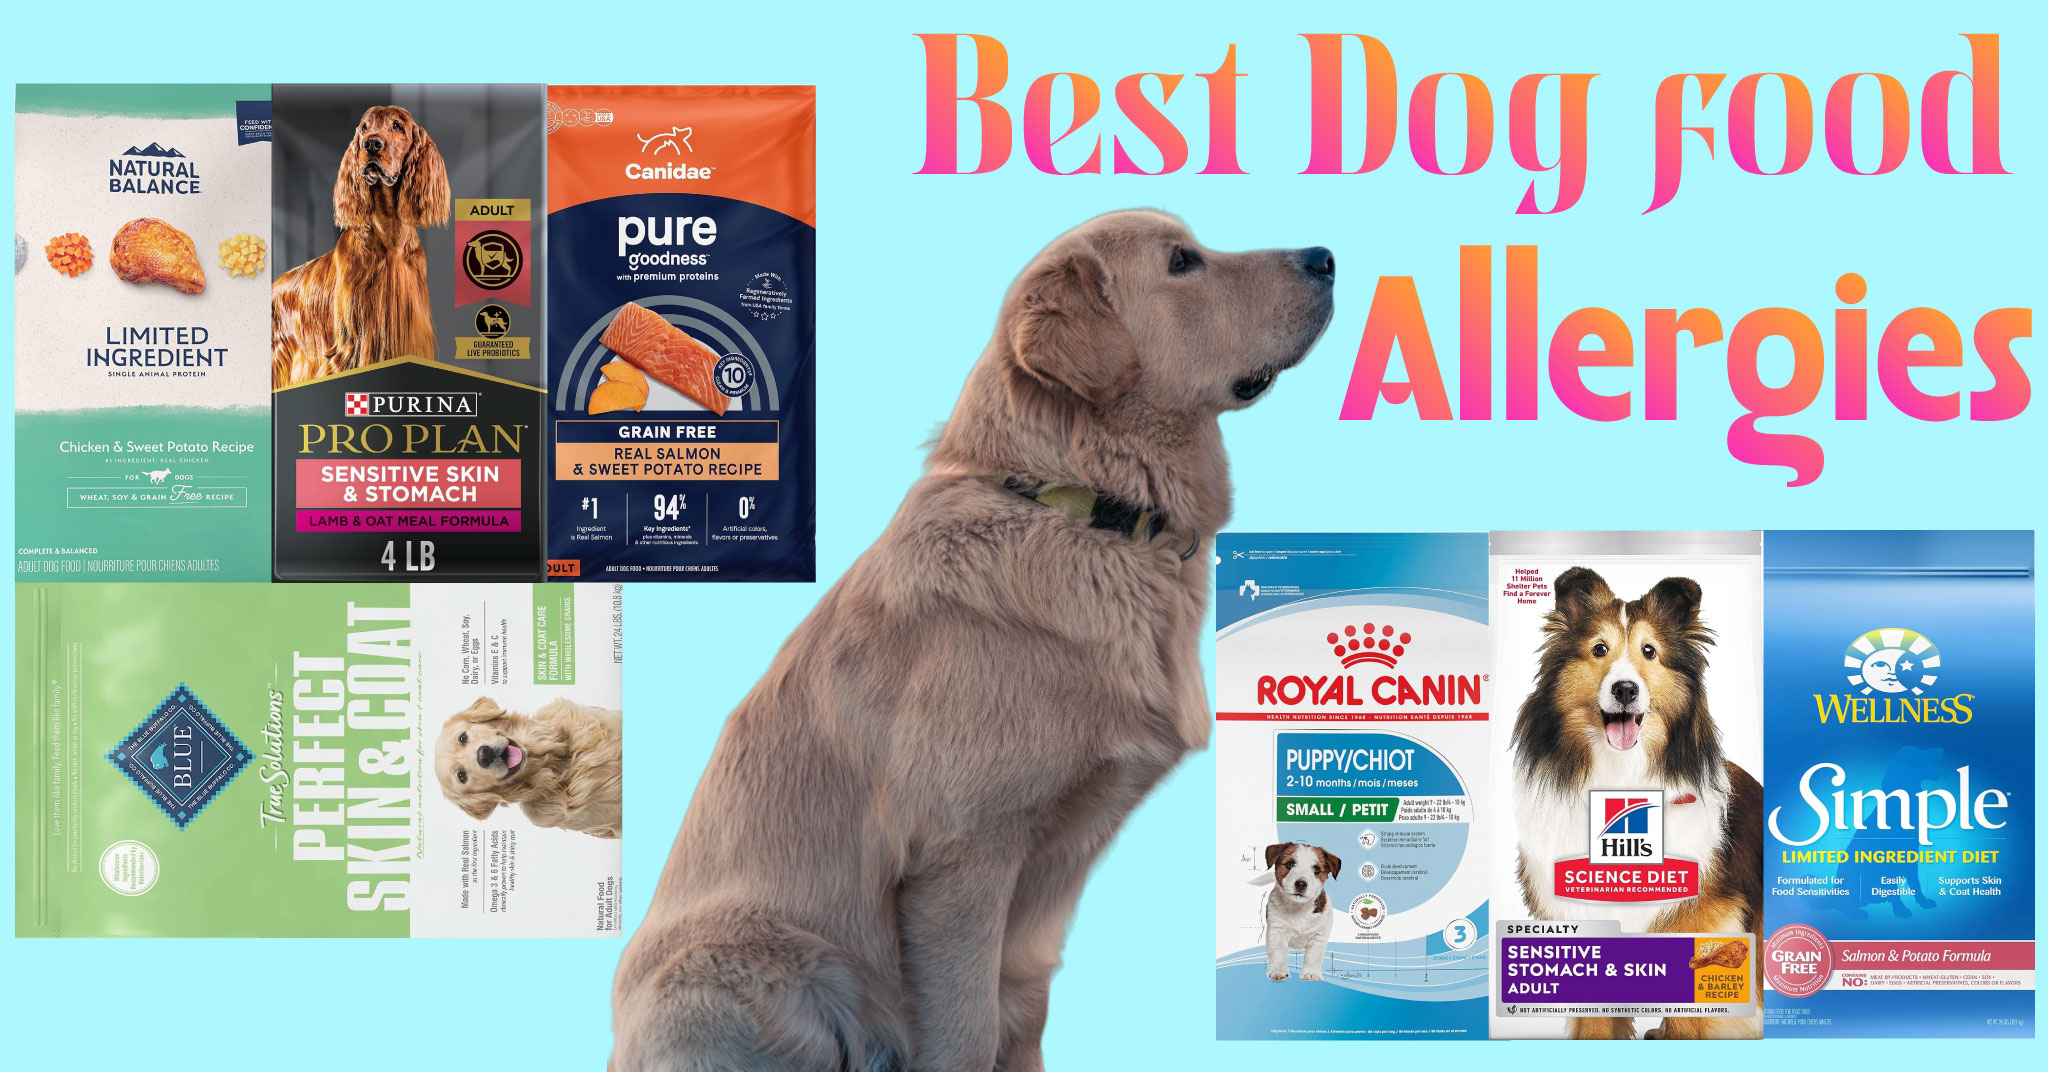 Best dog food allergies